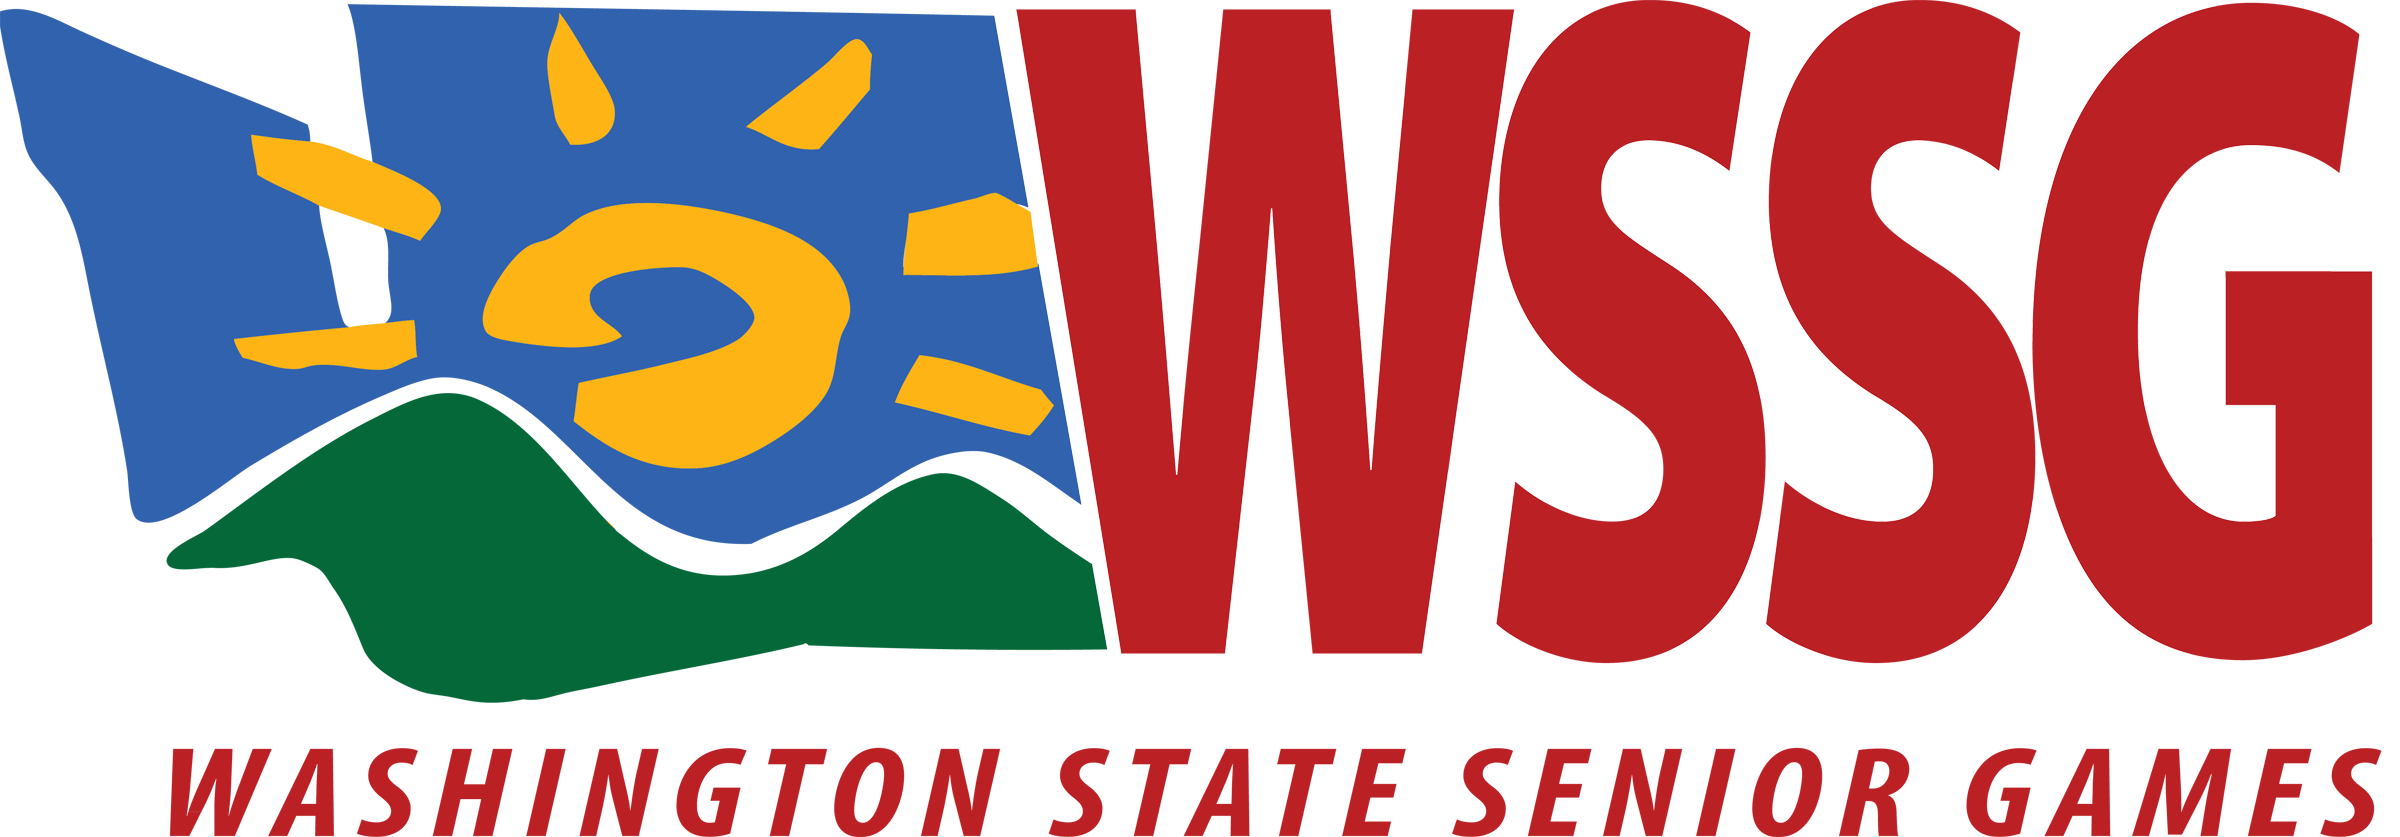 Washington State Senior Games logo